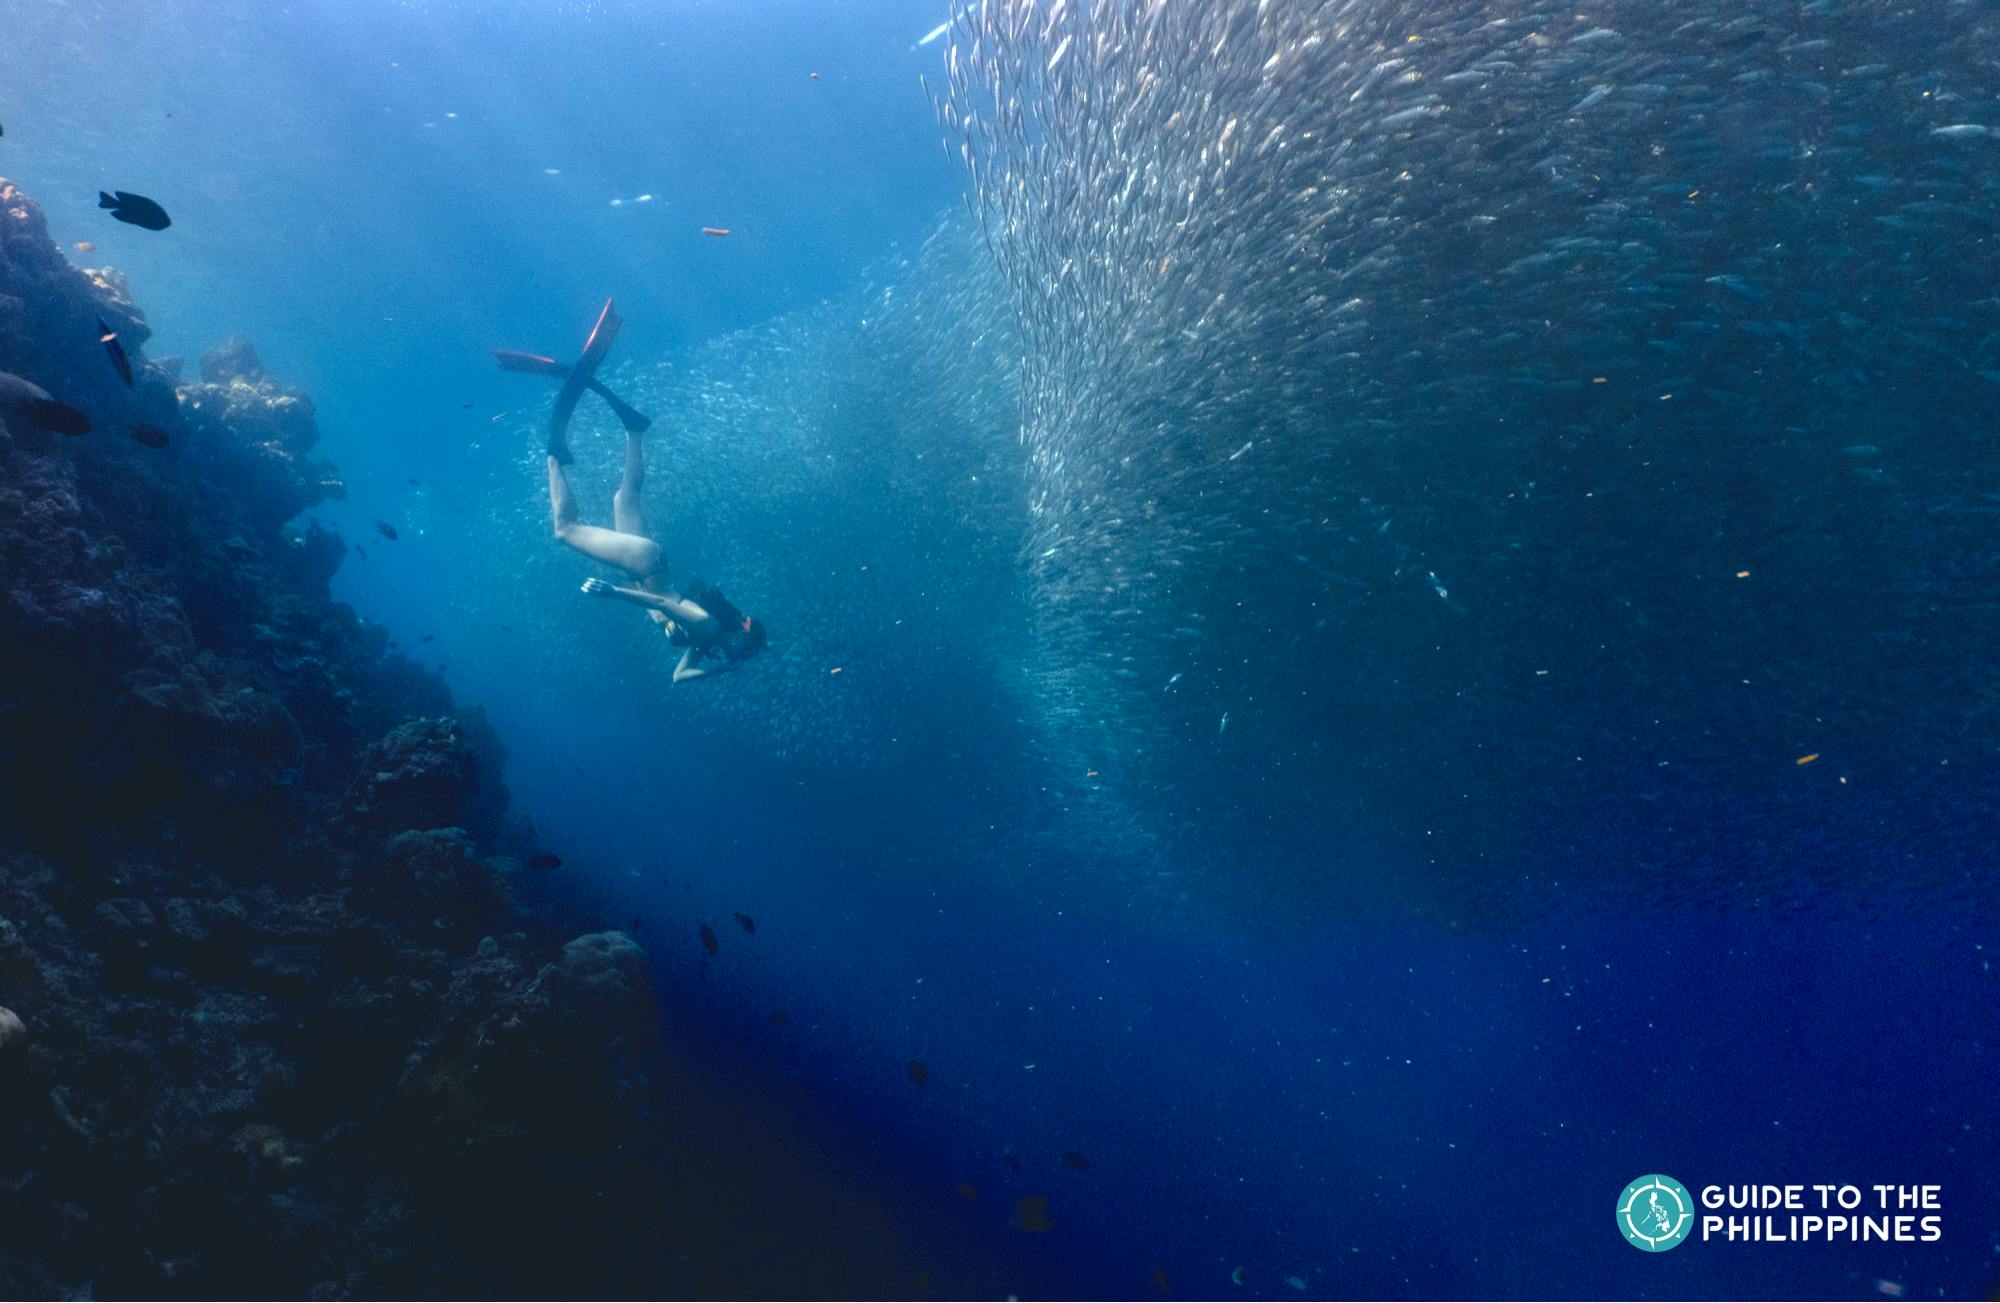 Moalboal sardine run in Cebu